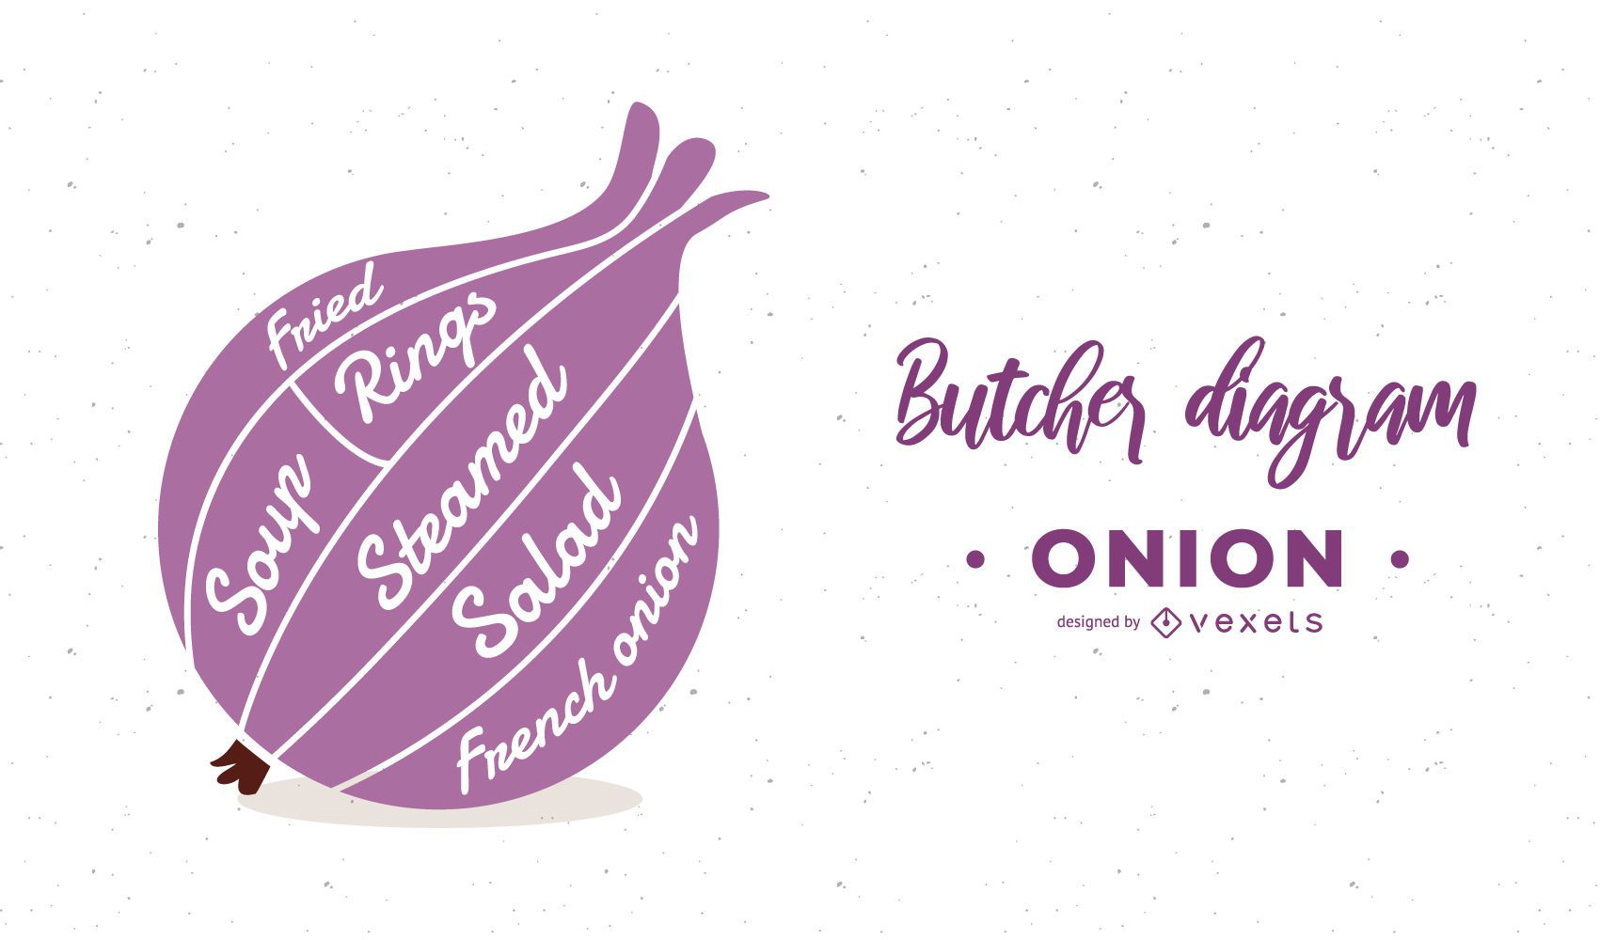 Onion Butcher Diagram Design